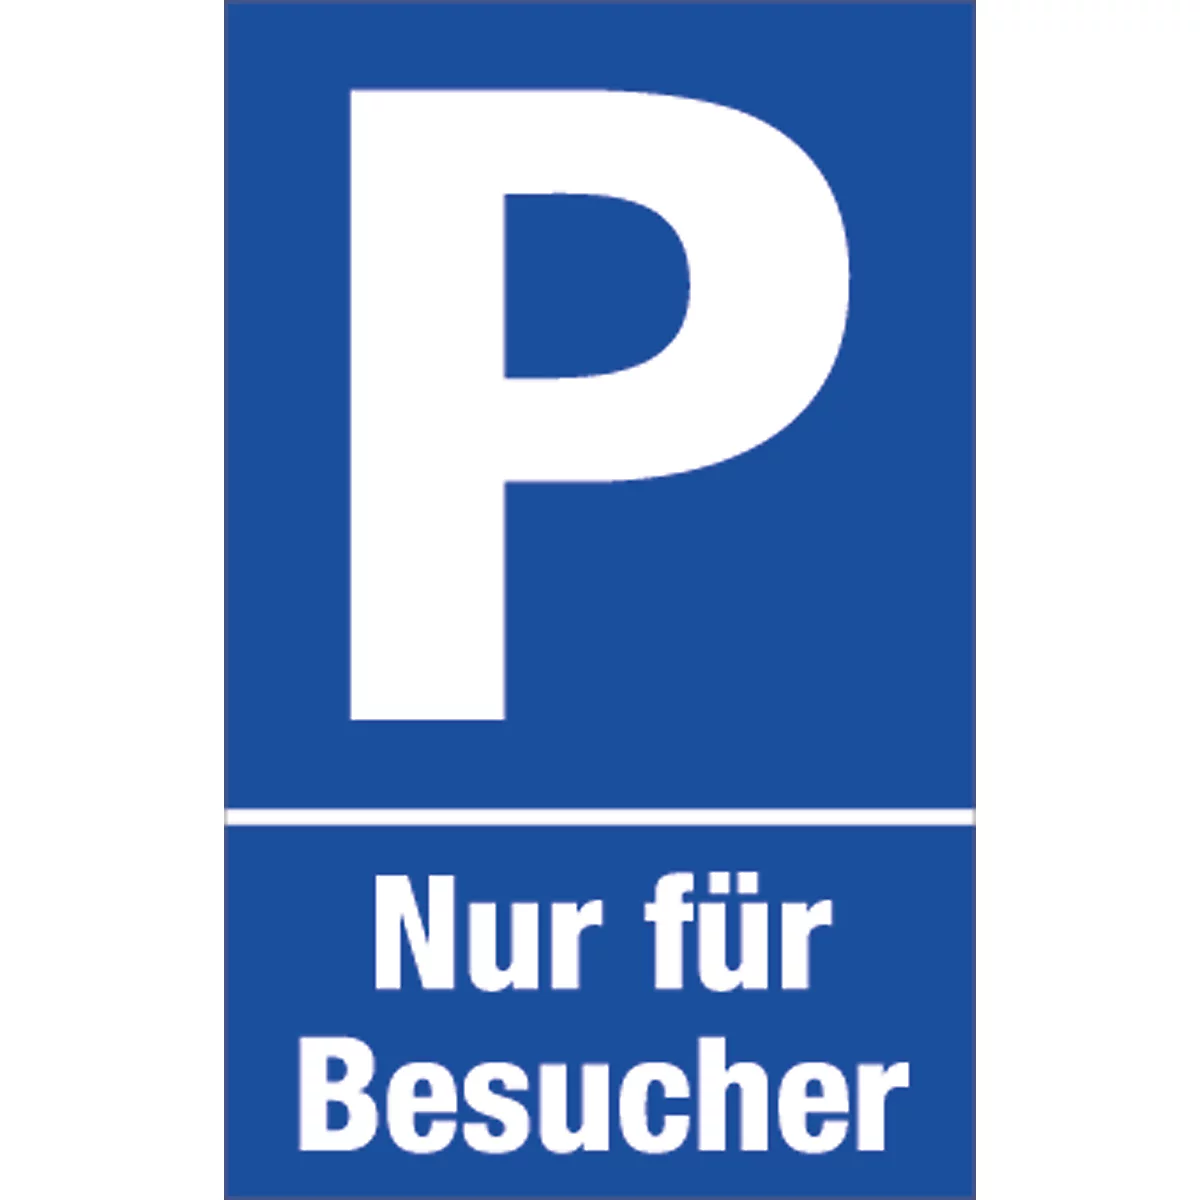 Señal de aparcamiento, "Nur für Besucher"